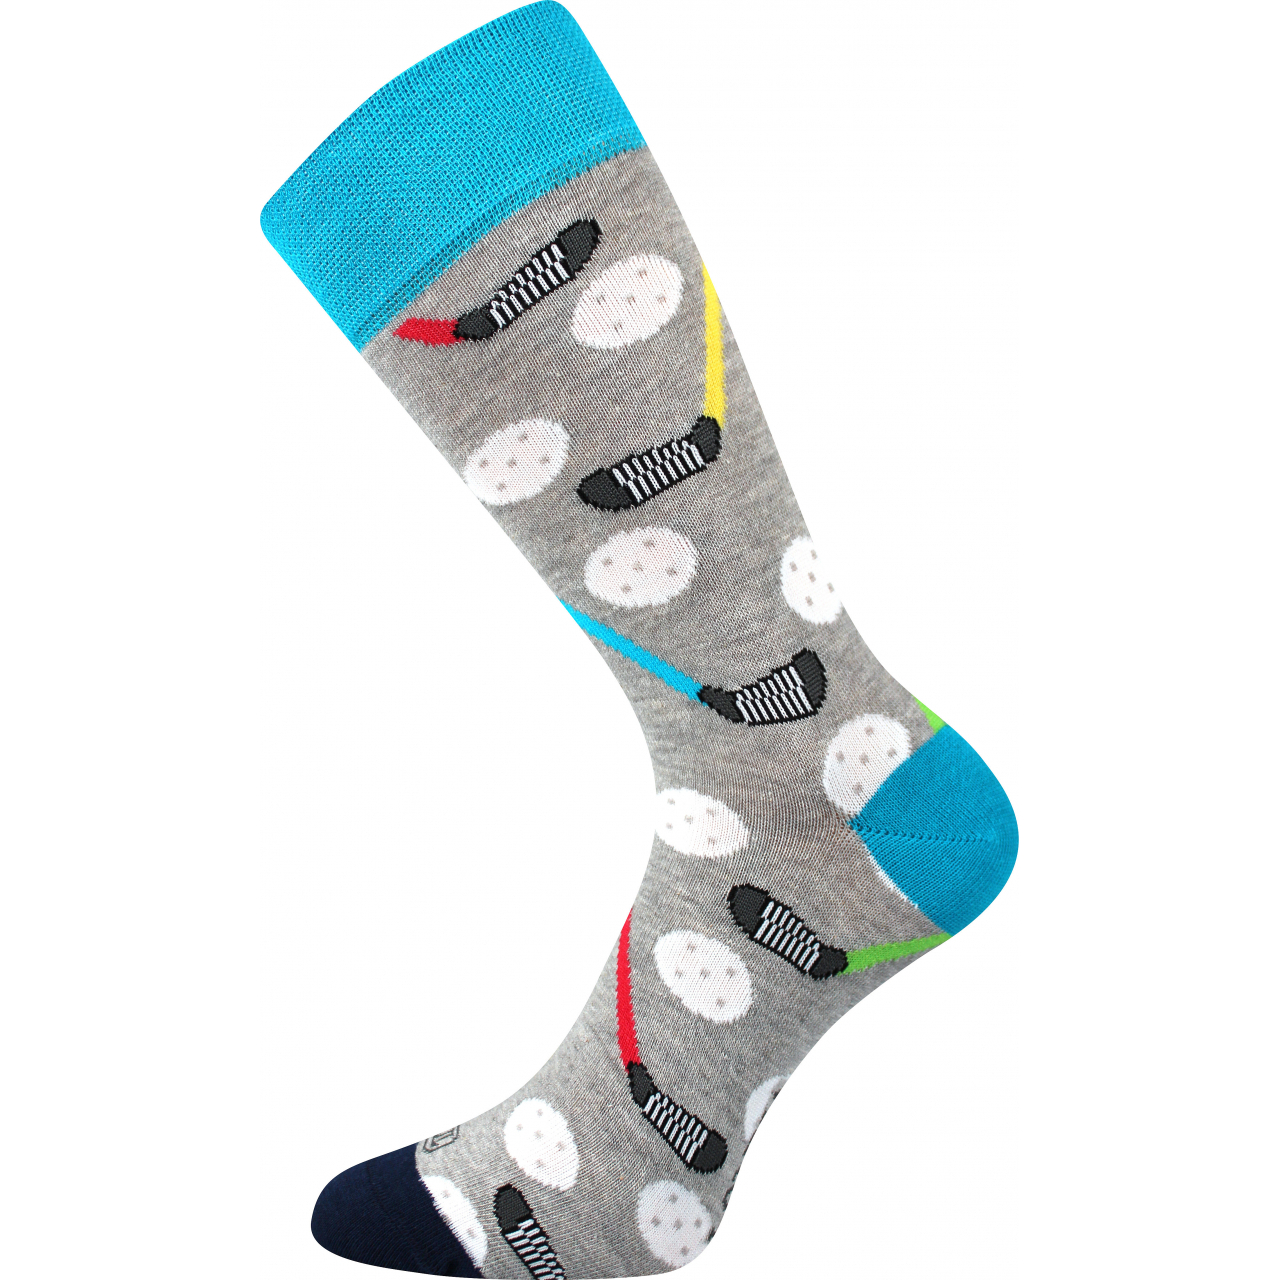 Ponožky unisex trendy Lonka Woodoo Florbal - šedé-modré, 39-42